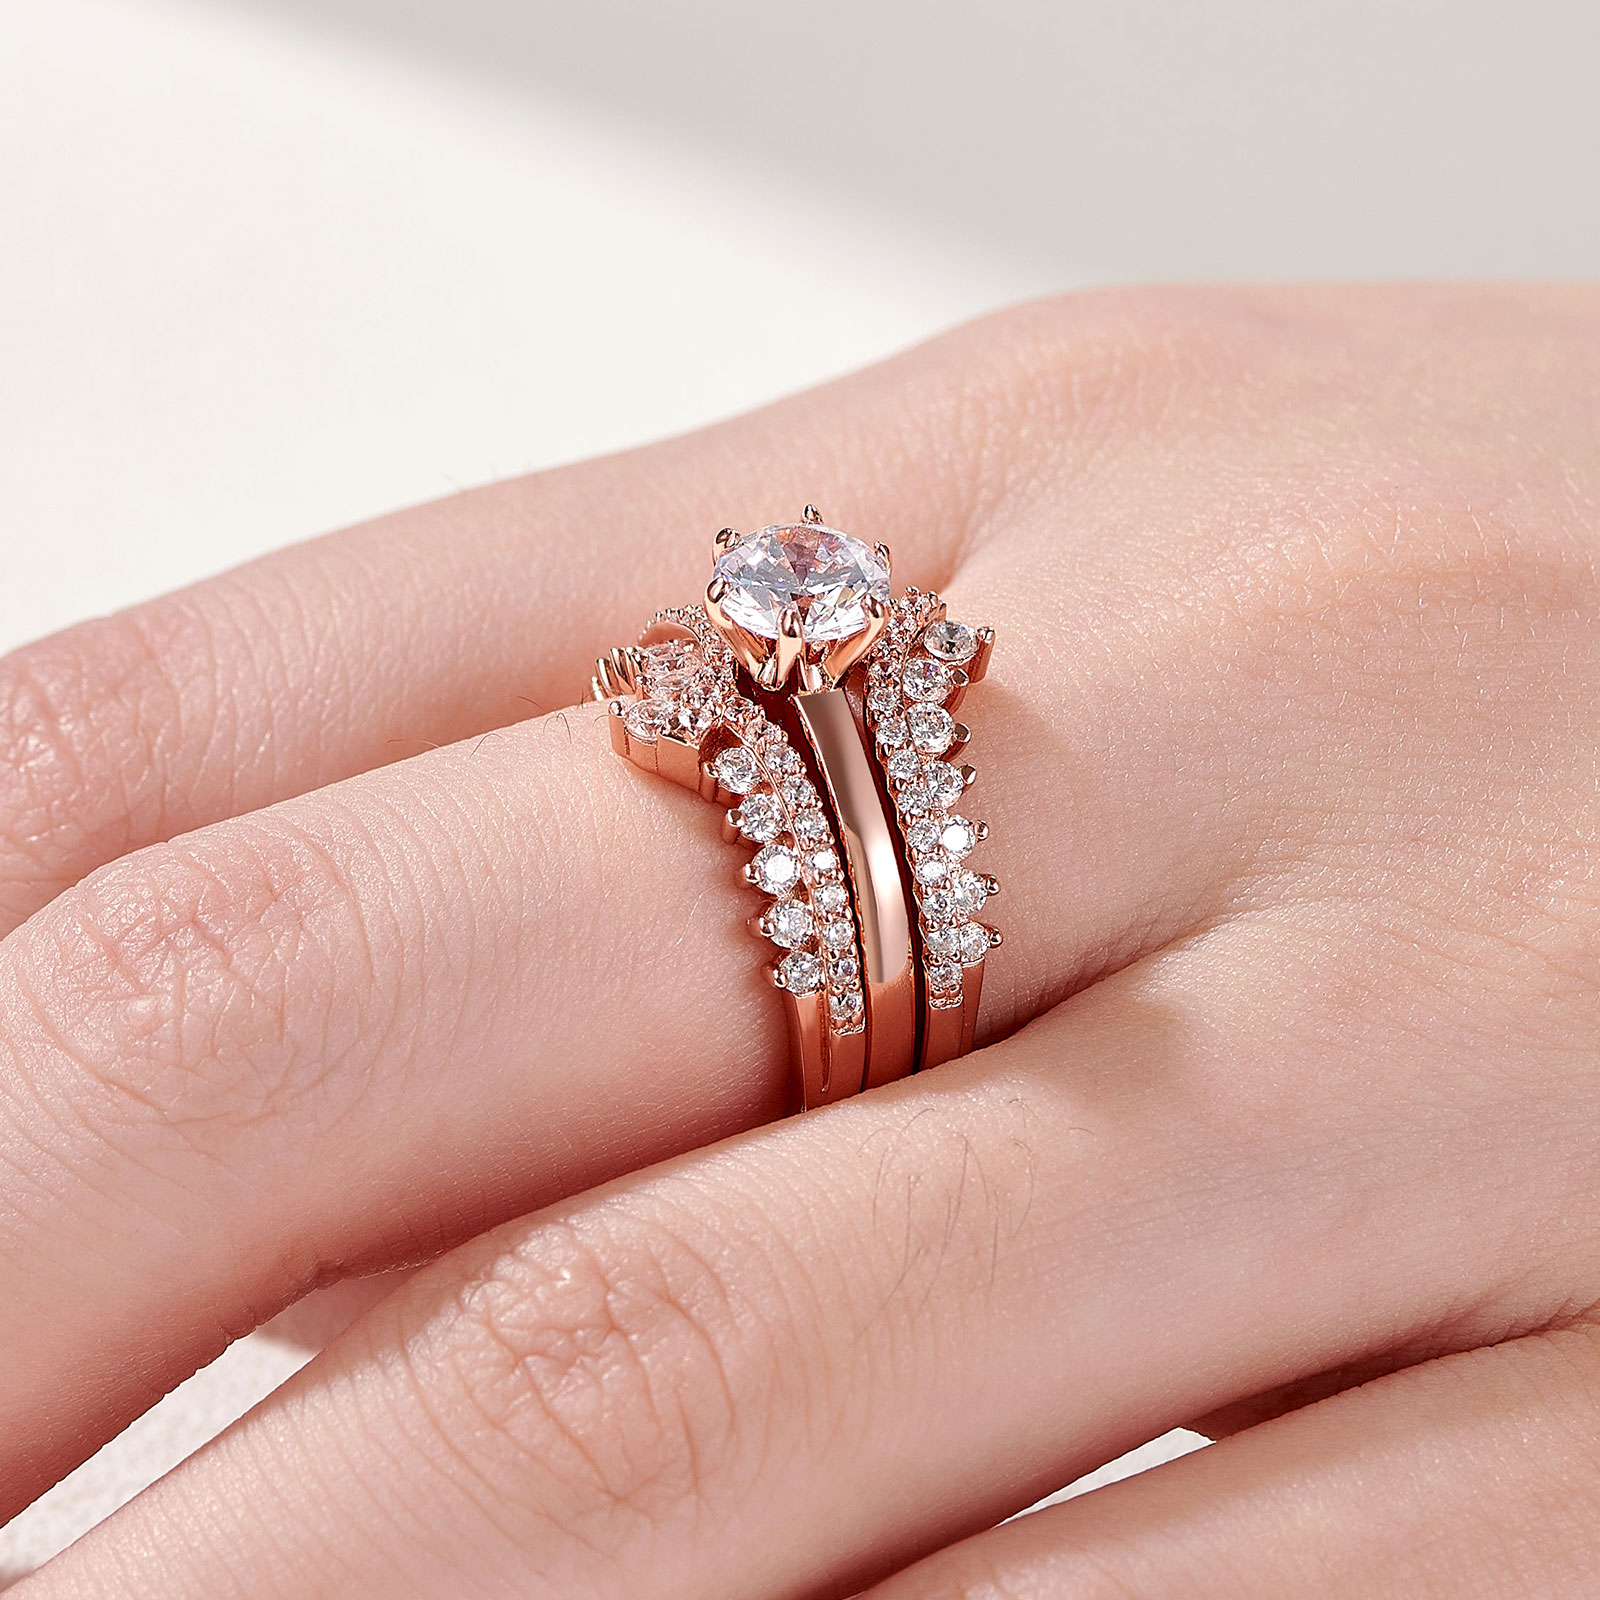 Newshe Wedding Rings for Women Engagement Ring Enhancer Band Bridal Set Sterling Silver 1.8Ct Cz Rose Gold Size 7.5 - image 5 of 7